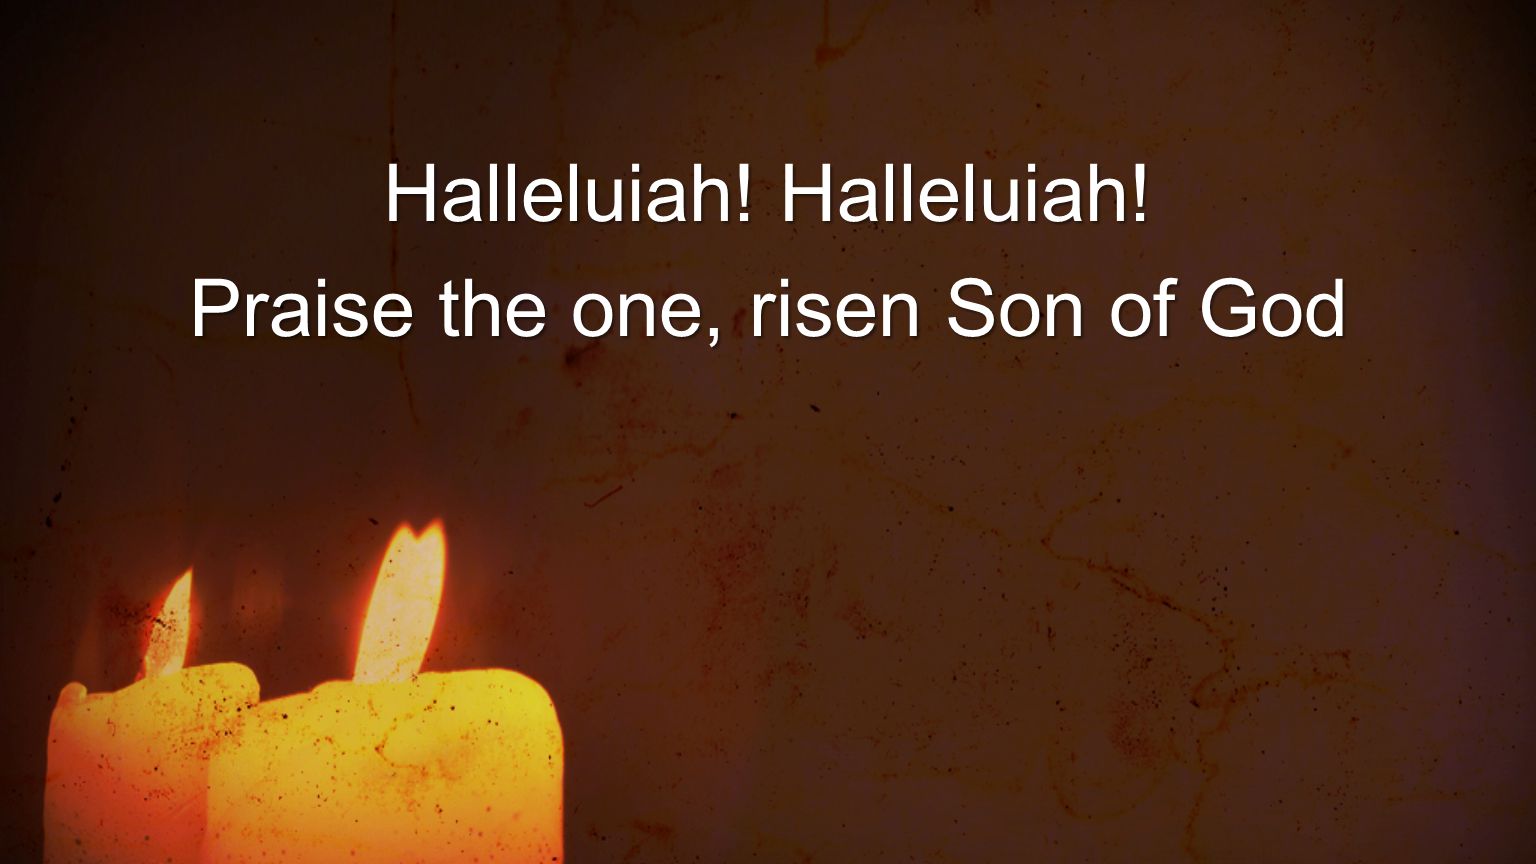 Halleluiah! Halleluiah! Praise the one, risen Son of God